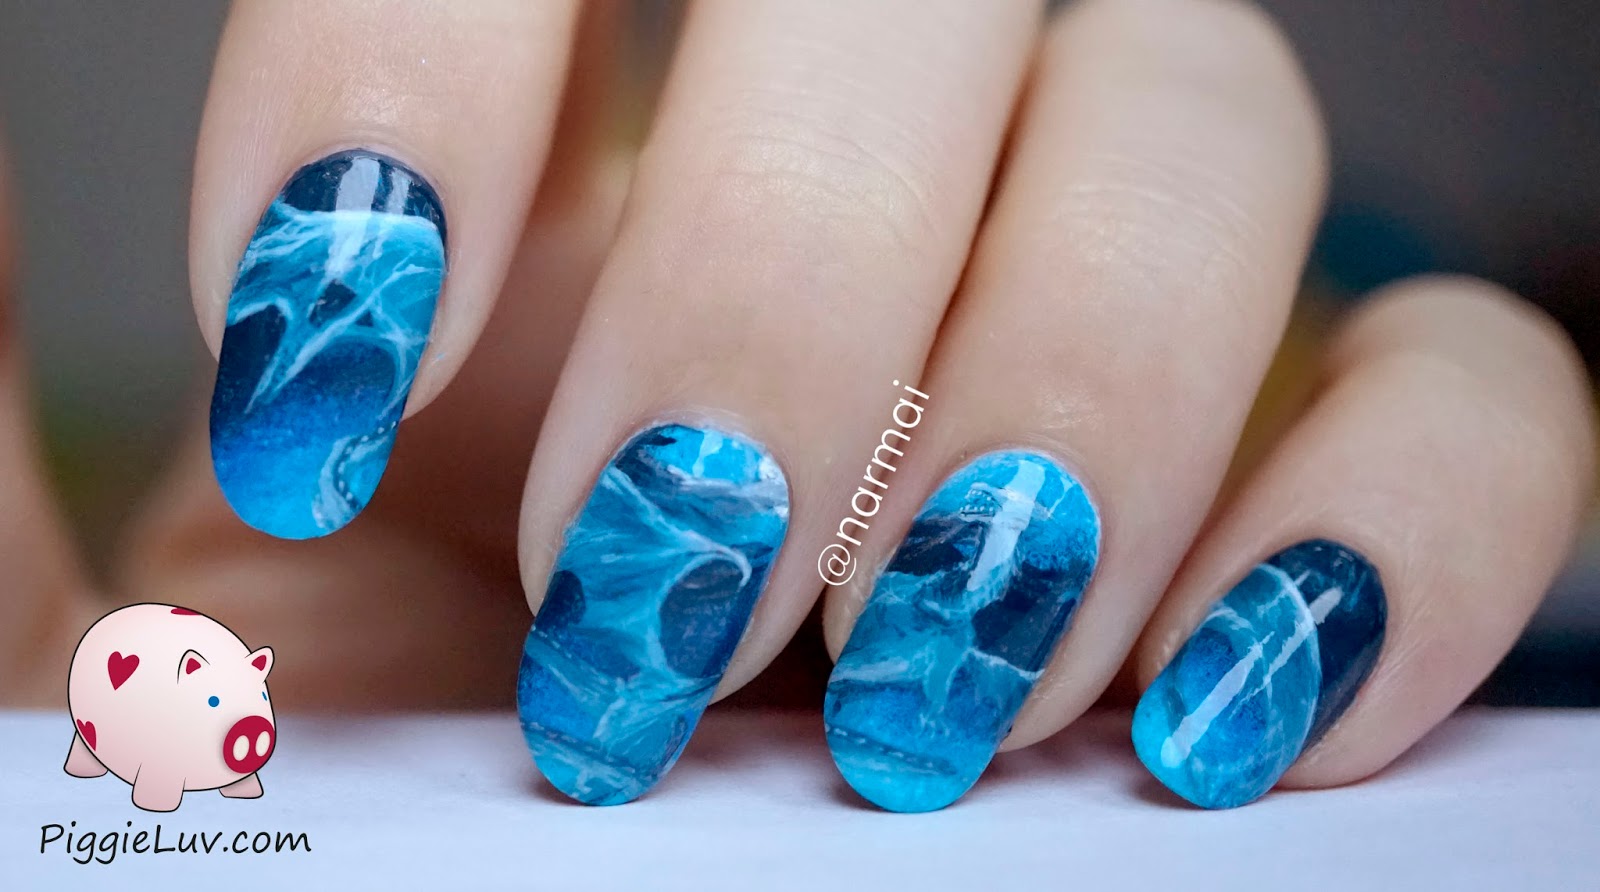 PiggieLuv: Blue water dragon nail art